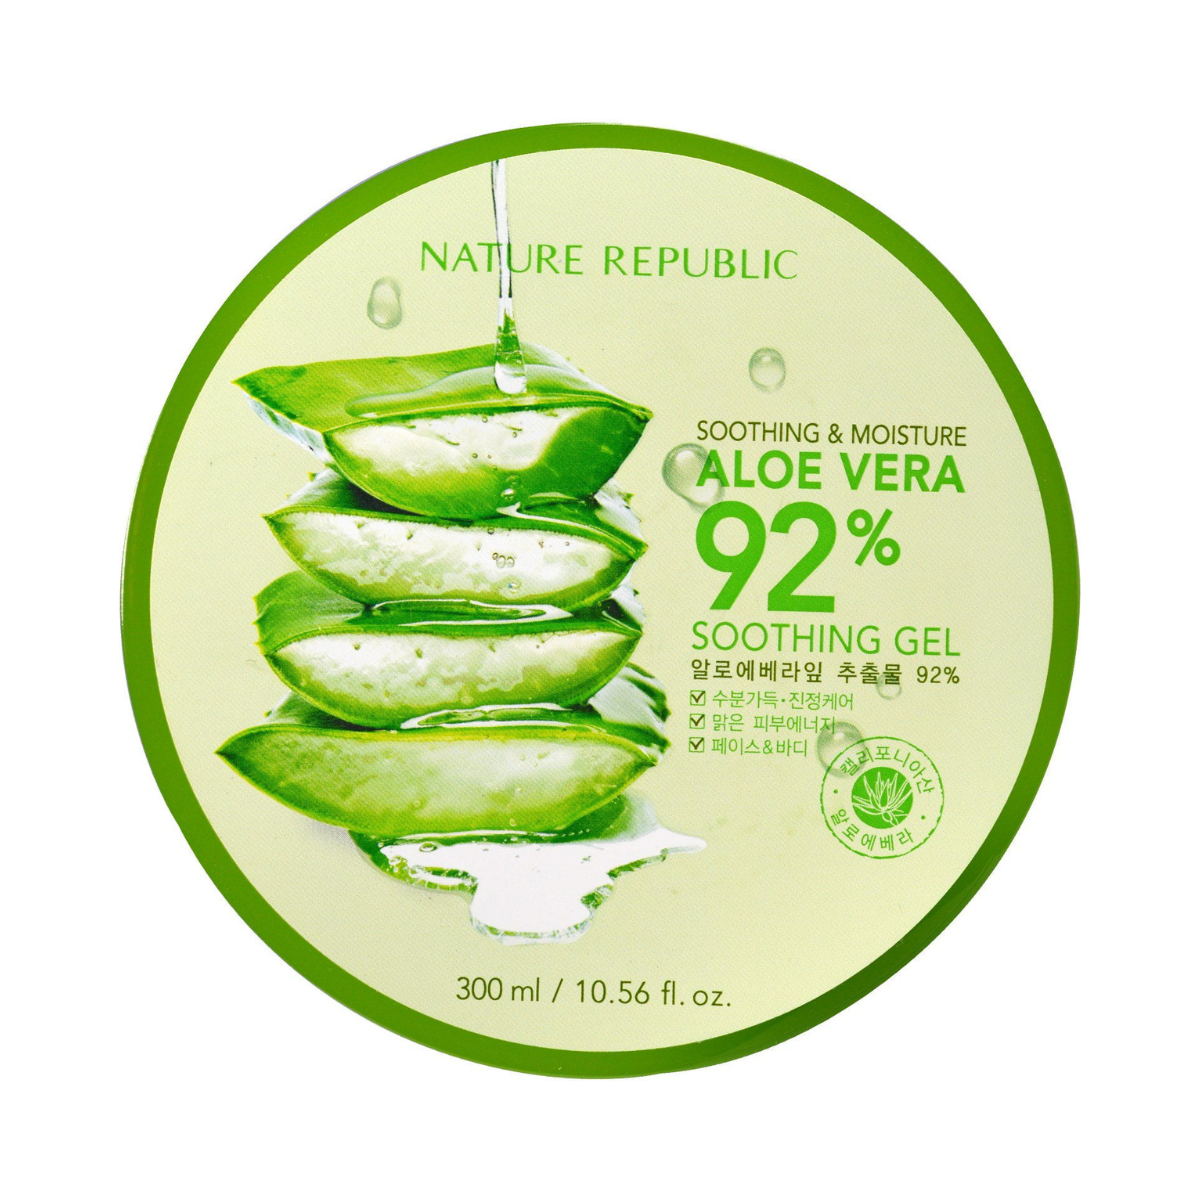 Nature Repubic Soothing & Moisturizing 92% Aloe Vera Gel - TokTok Beauty